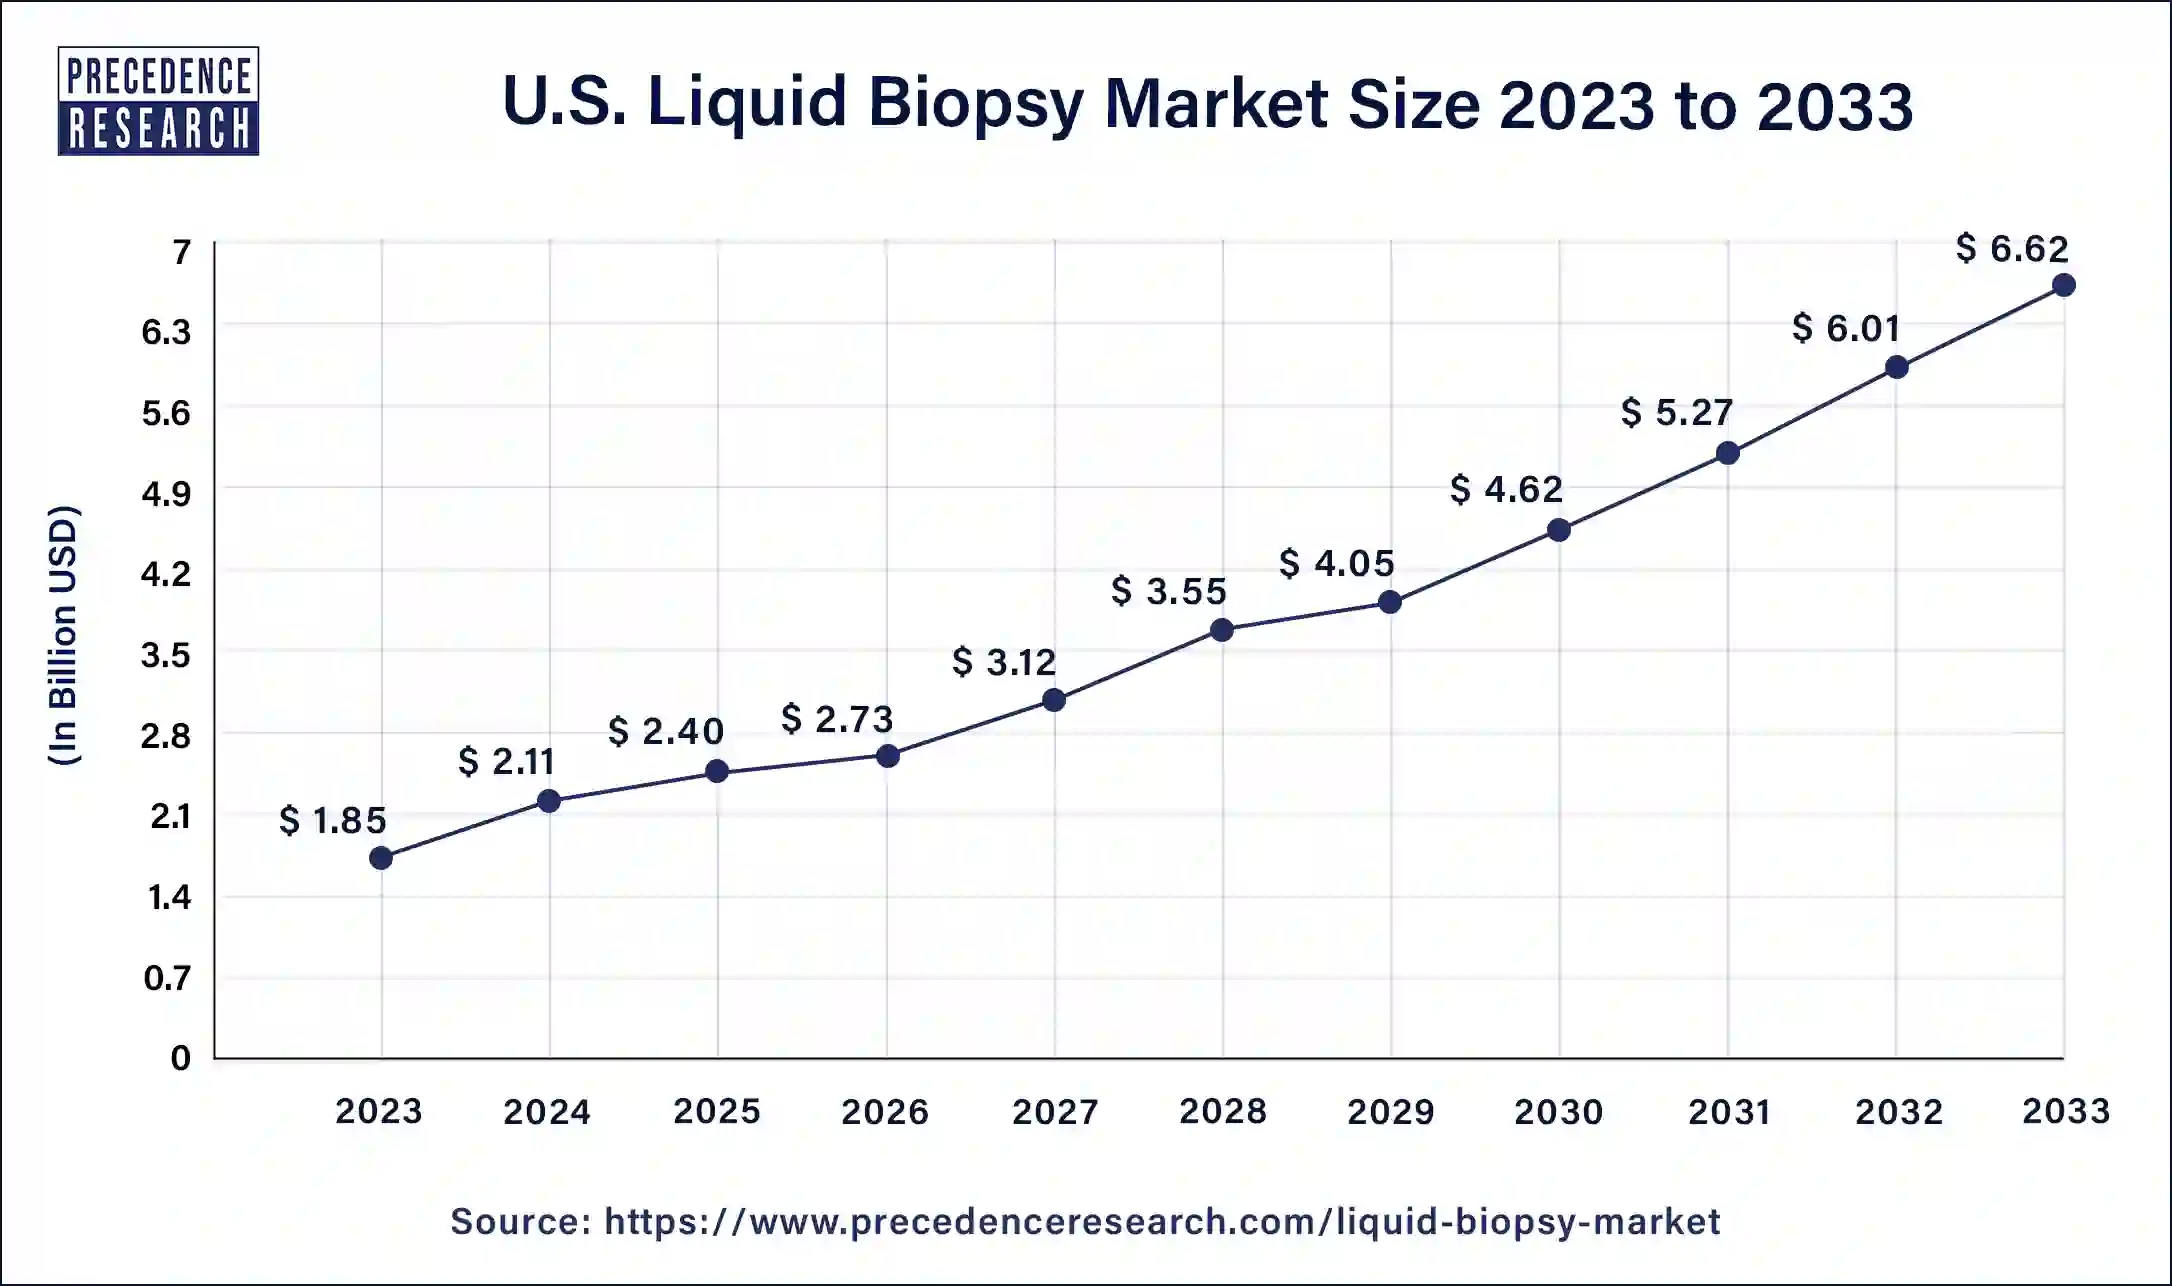 Liquid Biopsy Market Size in U.S. 2024 to 2033 